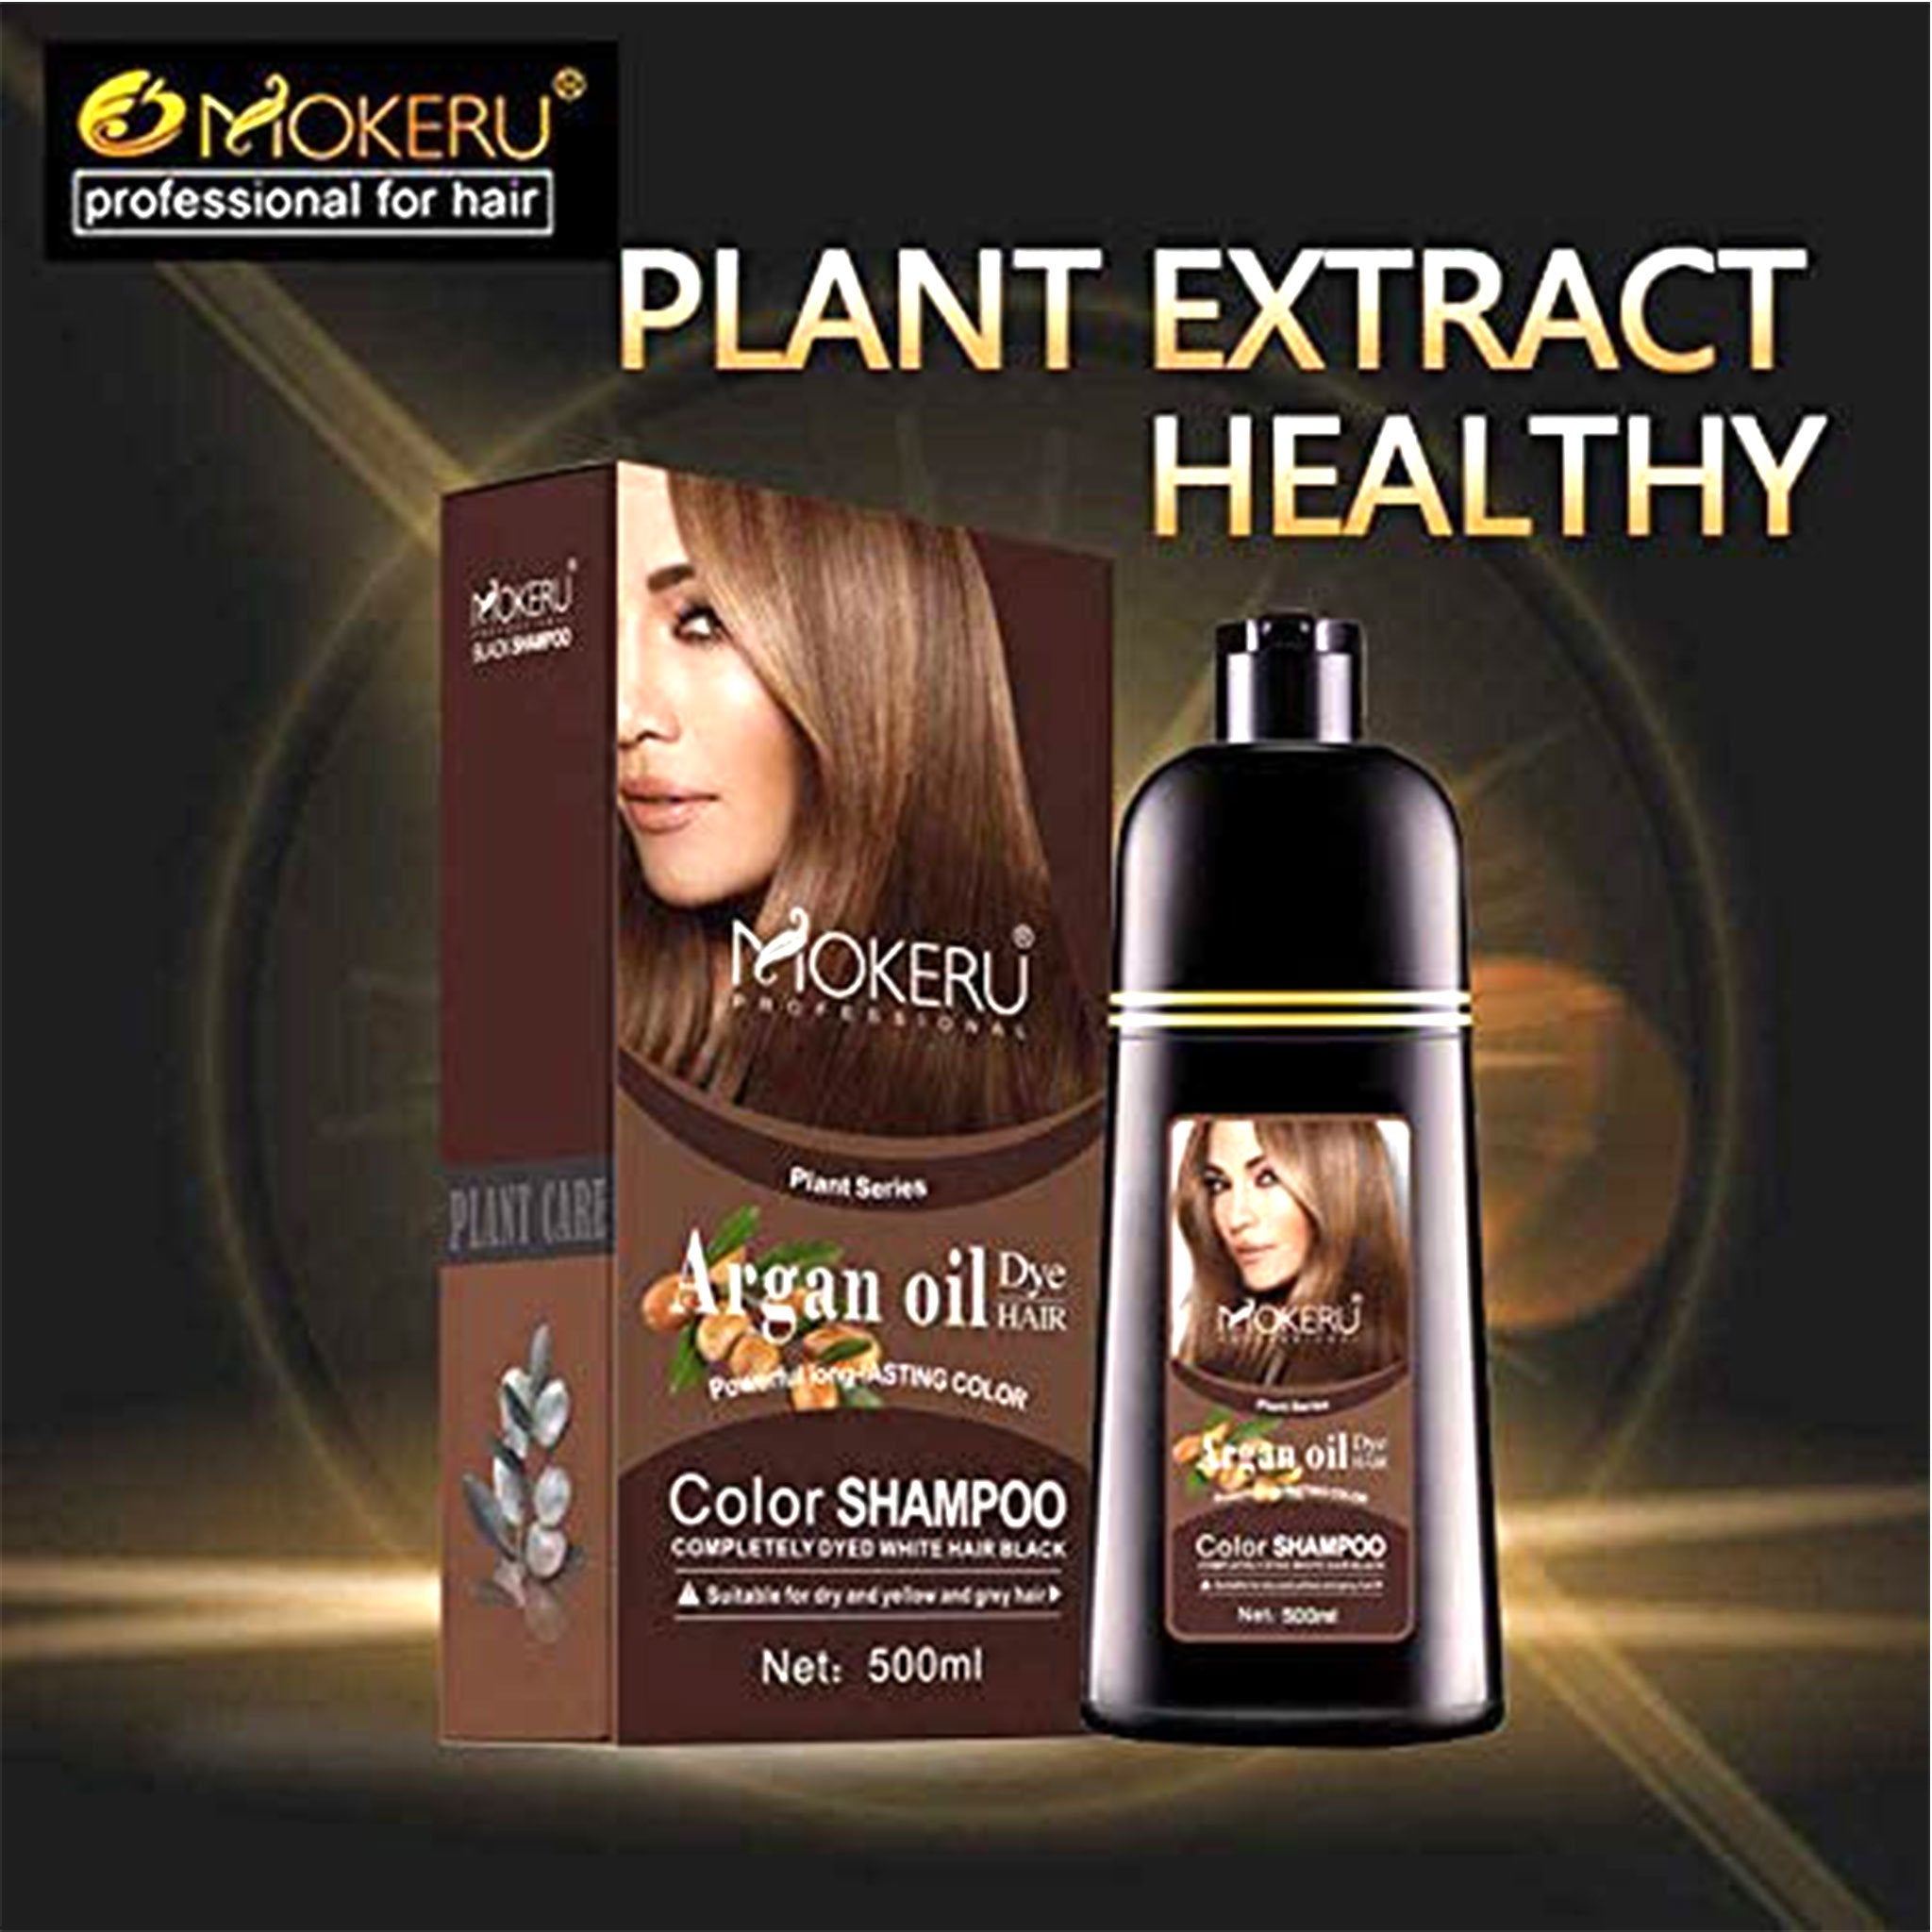 Pack of 2 Dark Brown Shampoo Hair Color 20ml